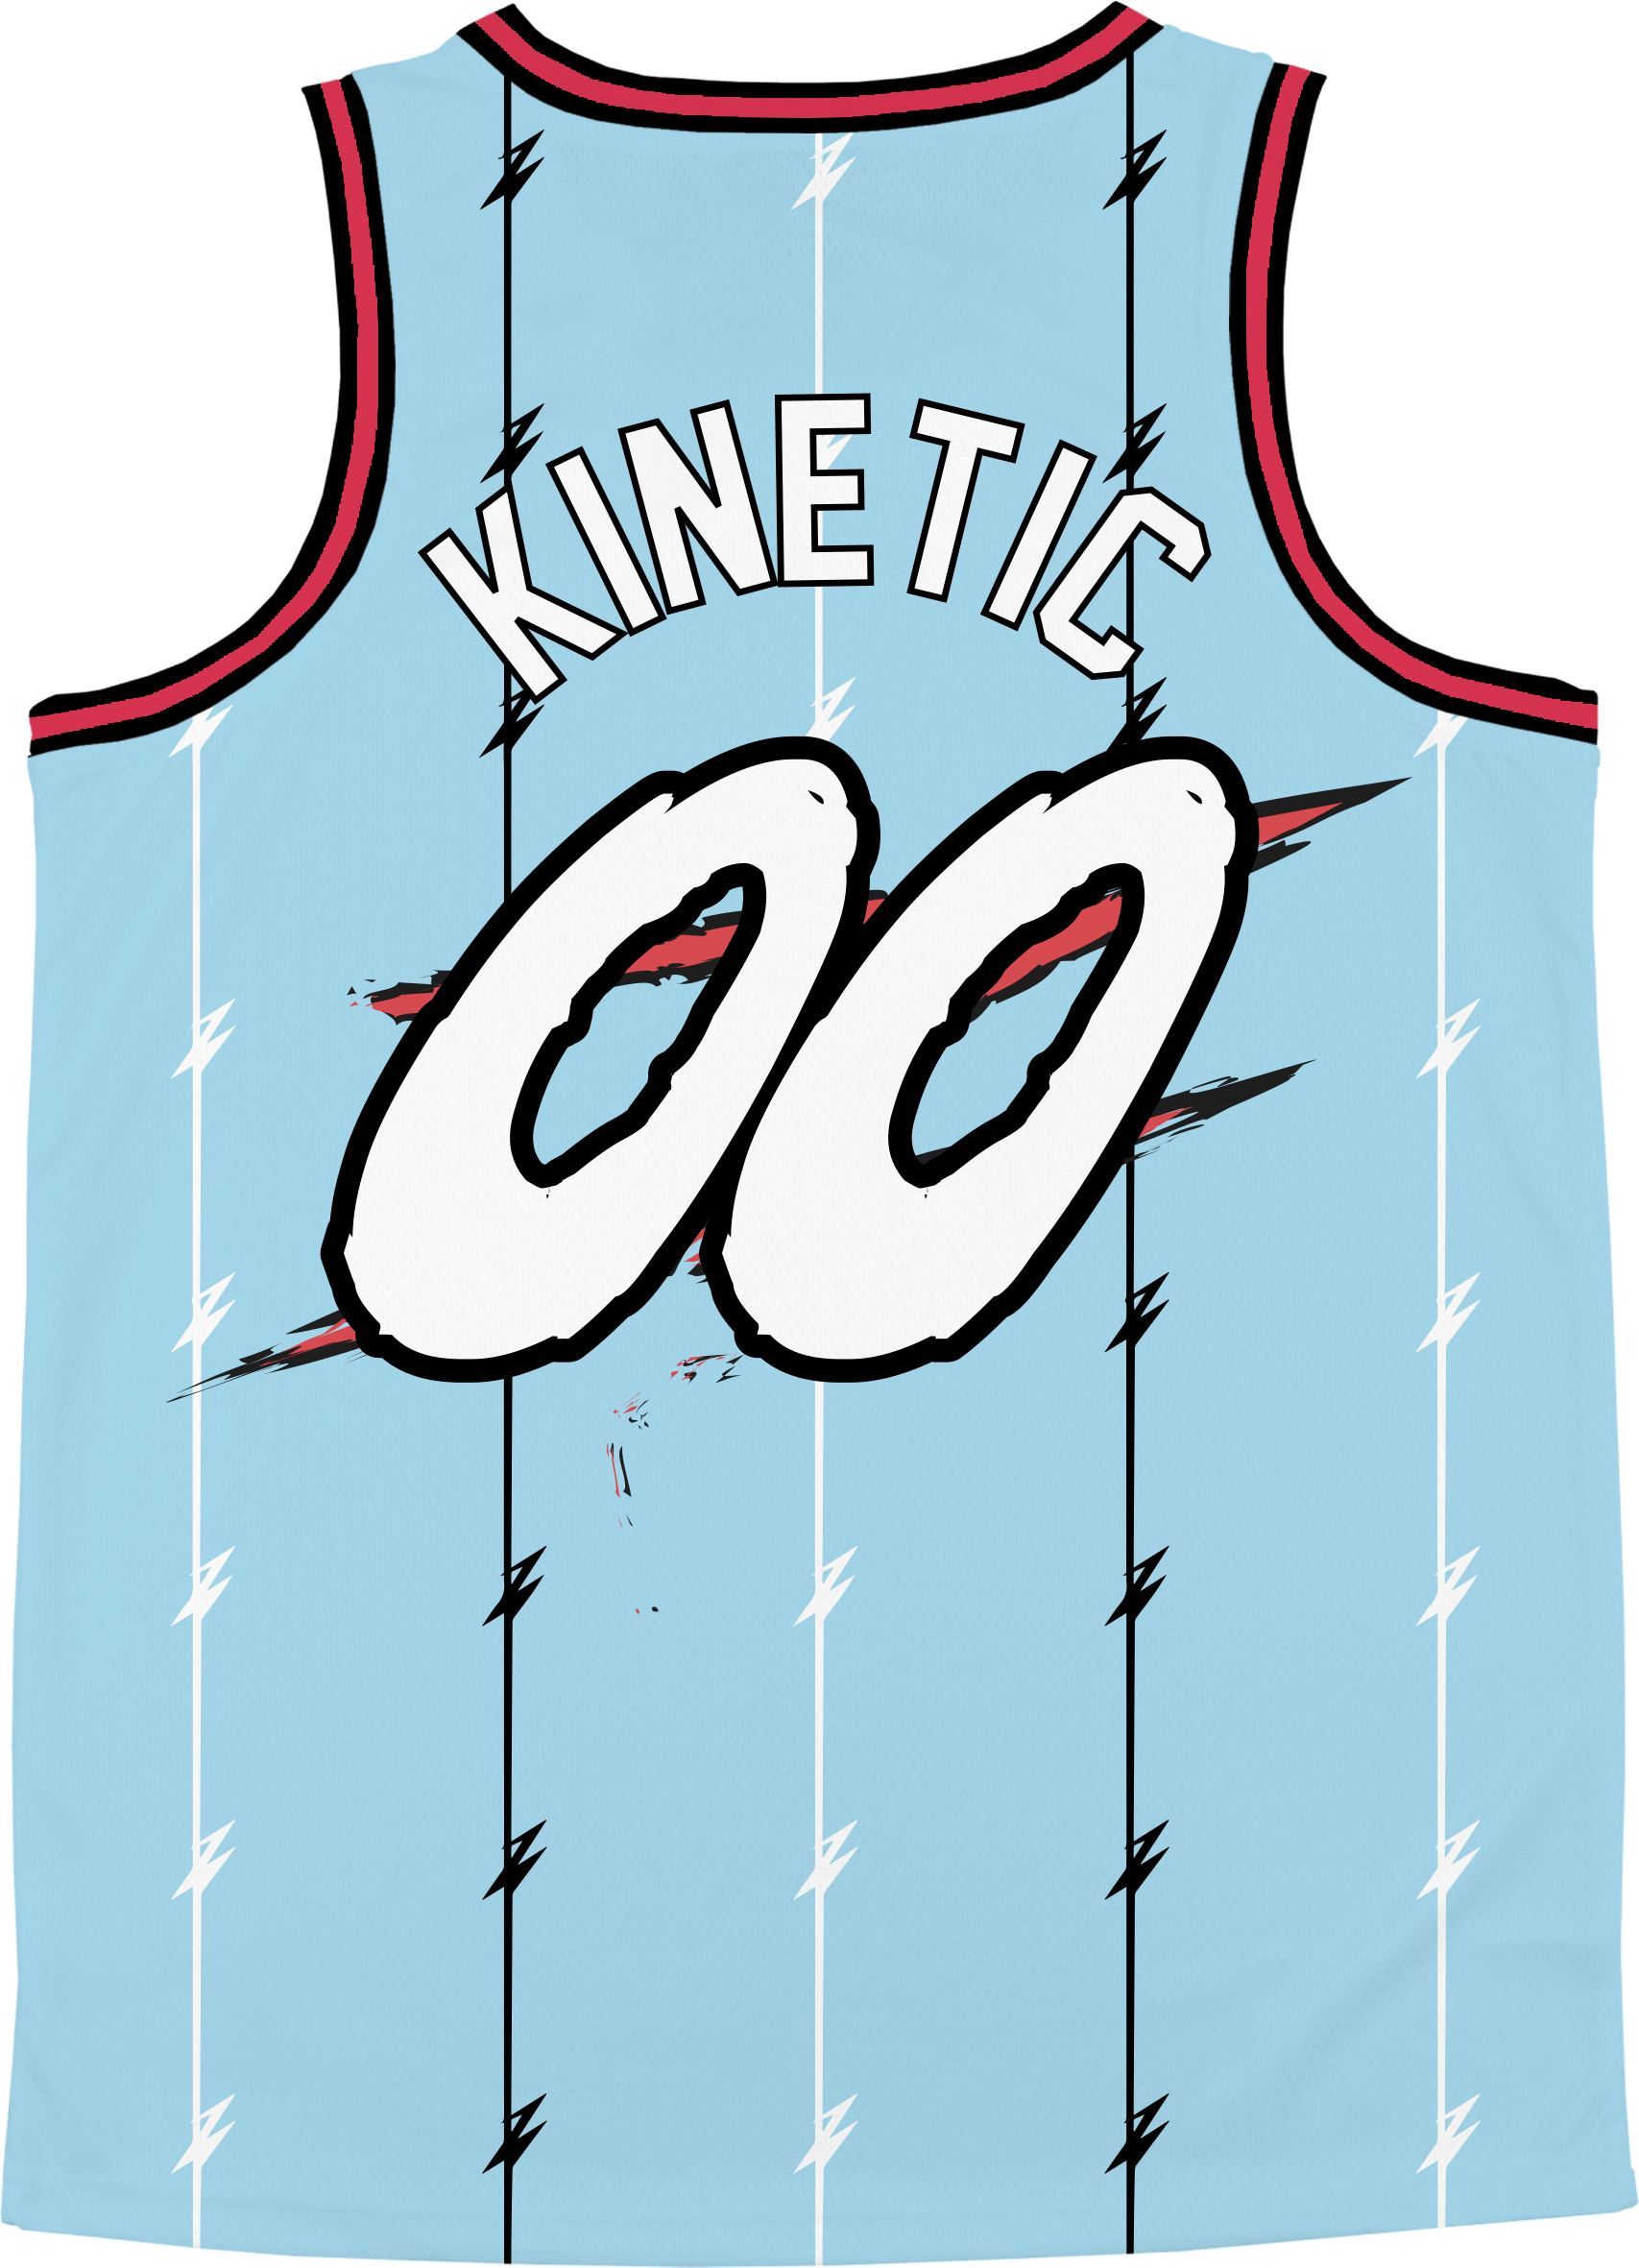 Zeta Beta Tau - Atlantis Basketball Jersey - Kinetic Society